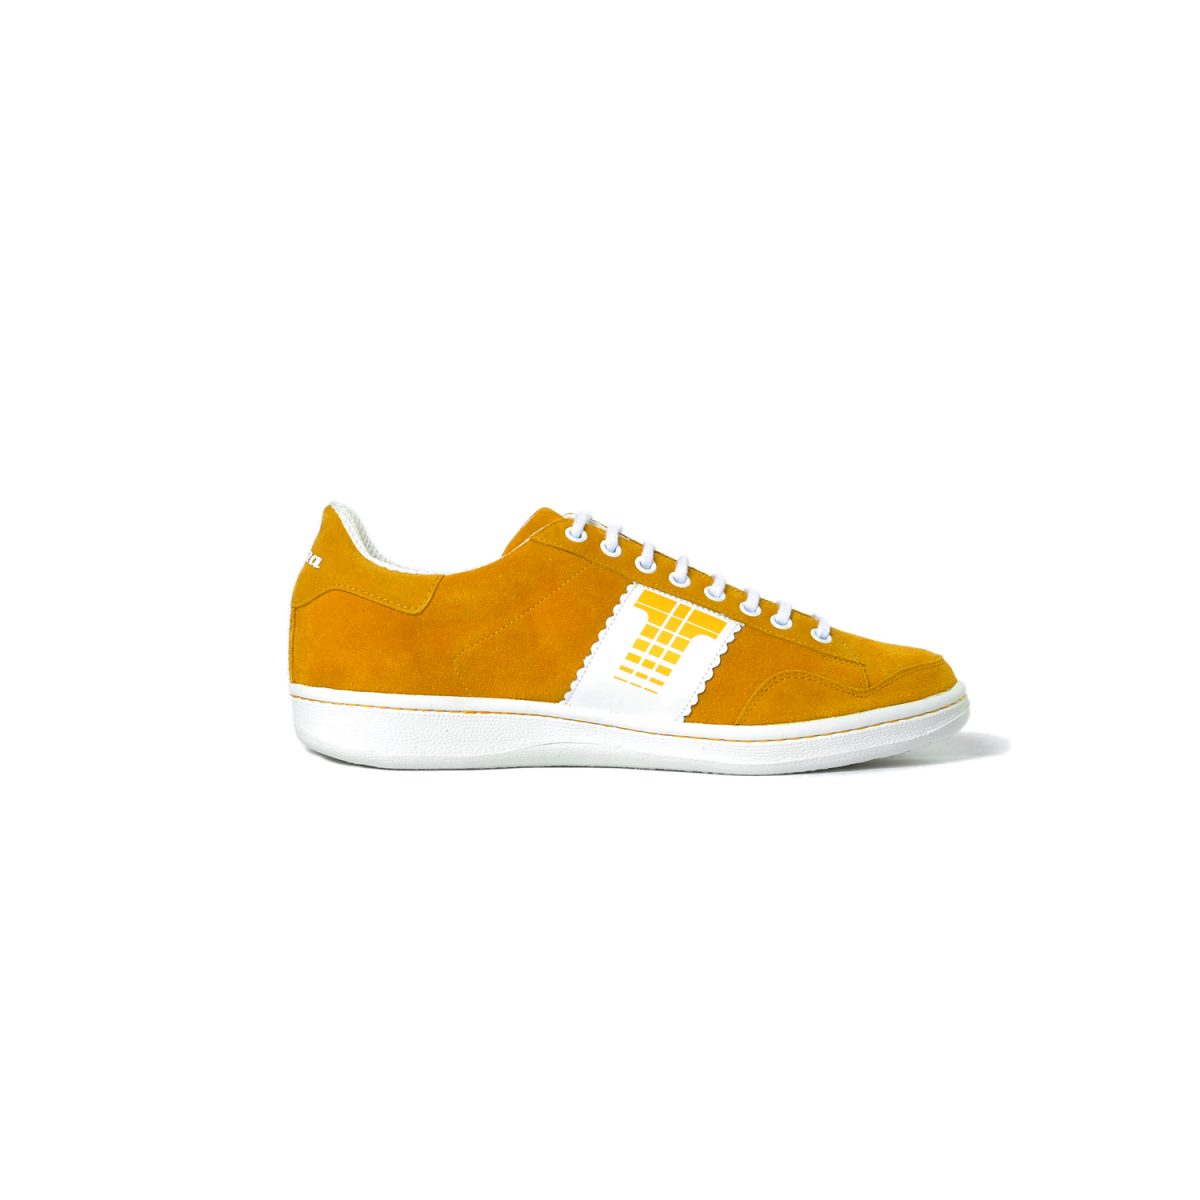 Tisza cipő - Derby - Sárga